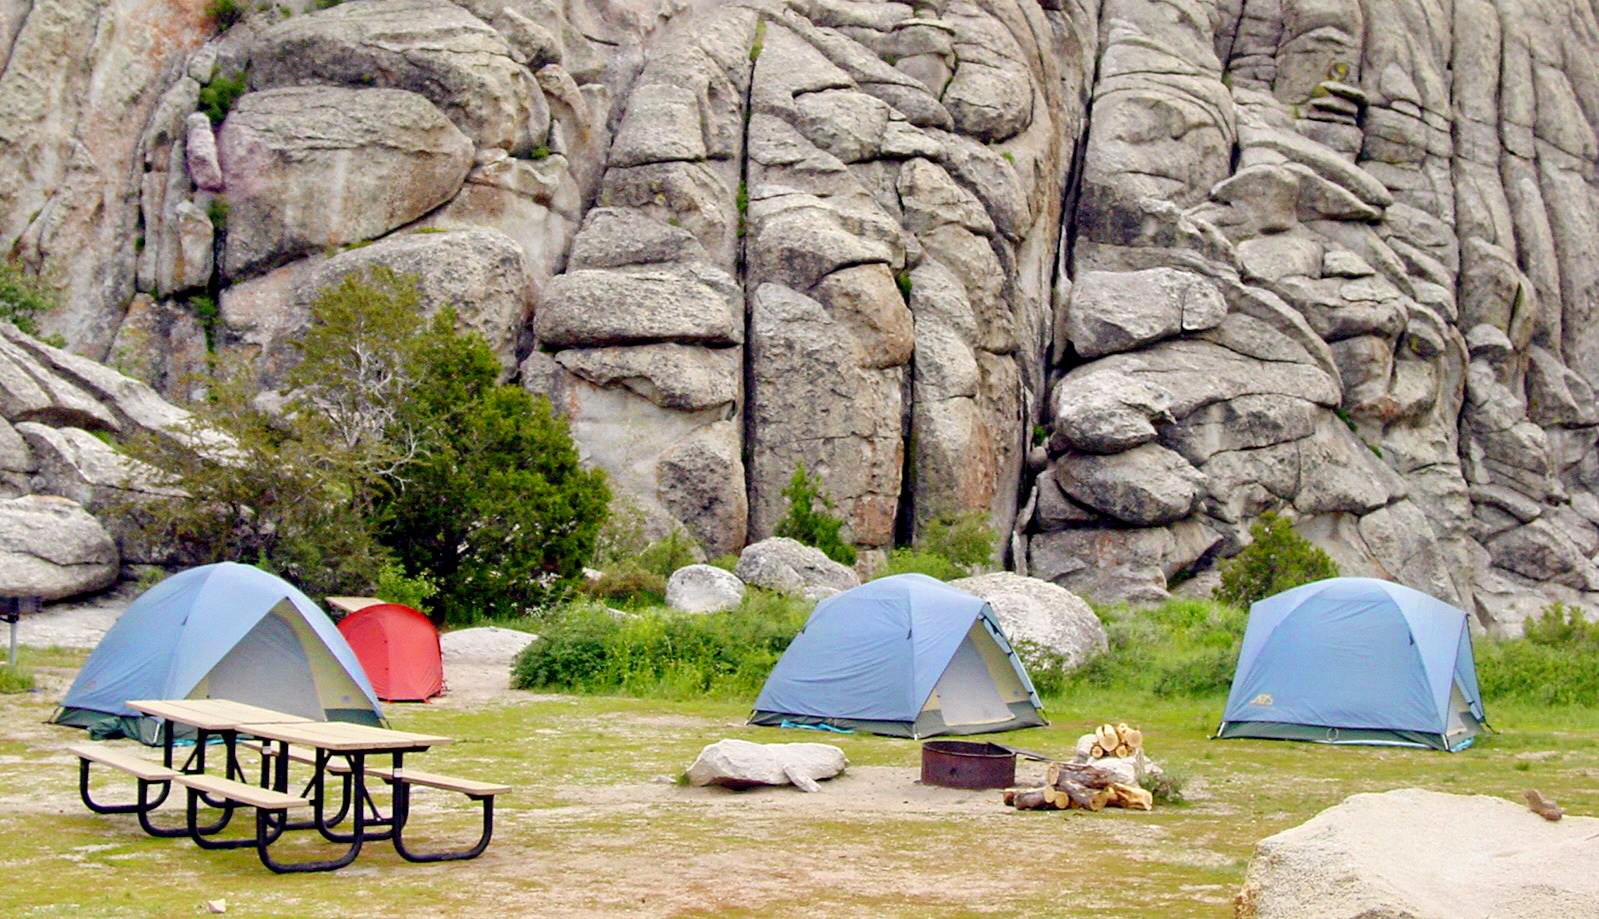 Numerous tents are set up below granite rocks